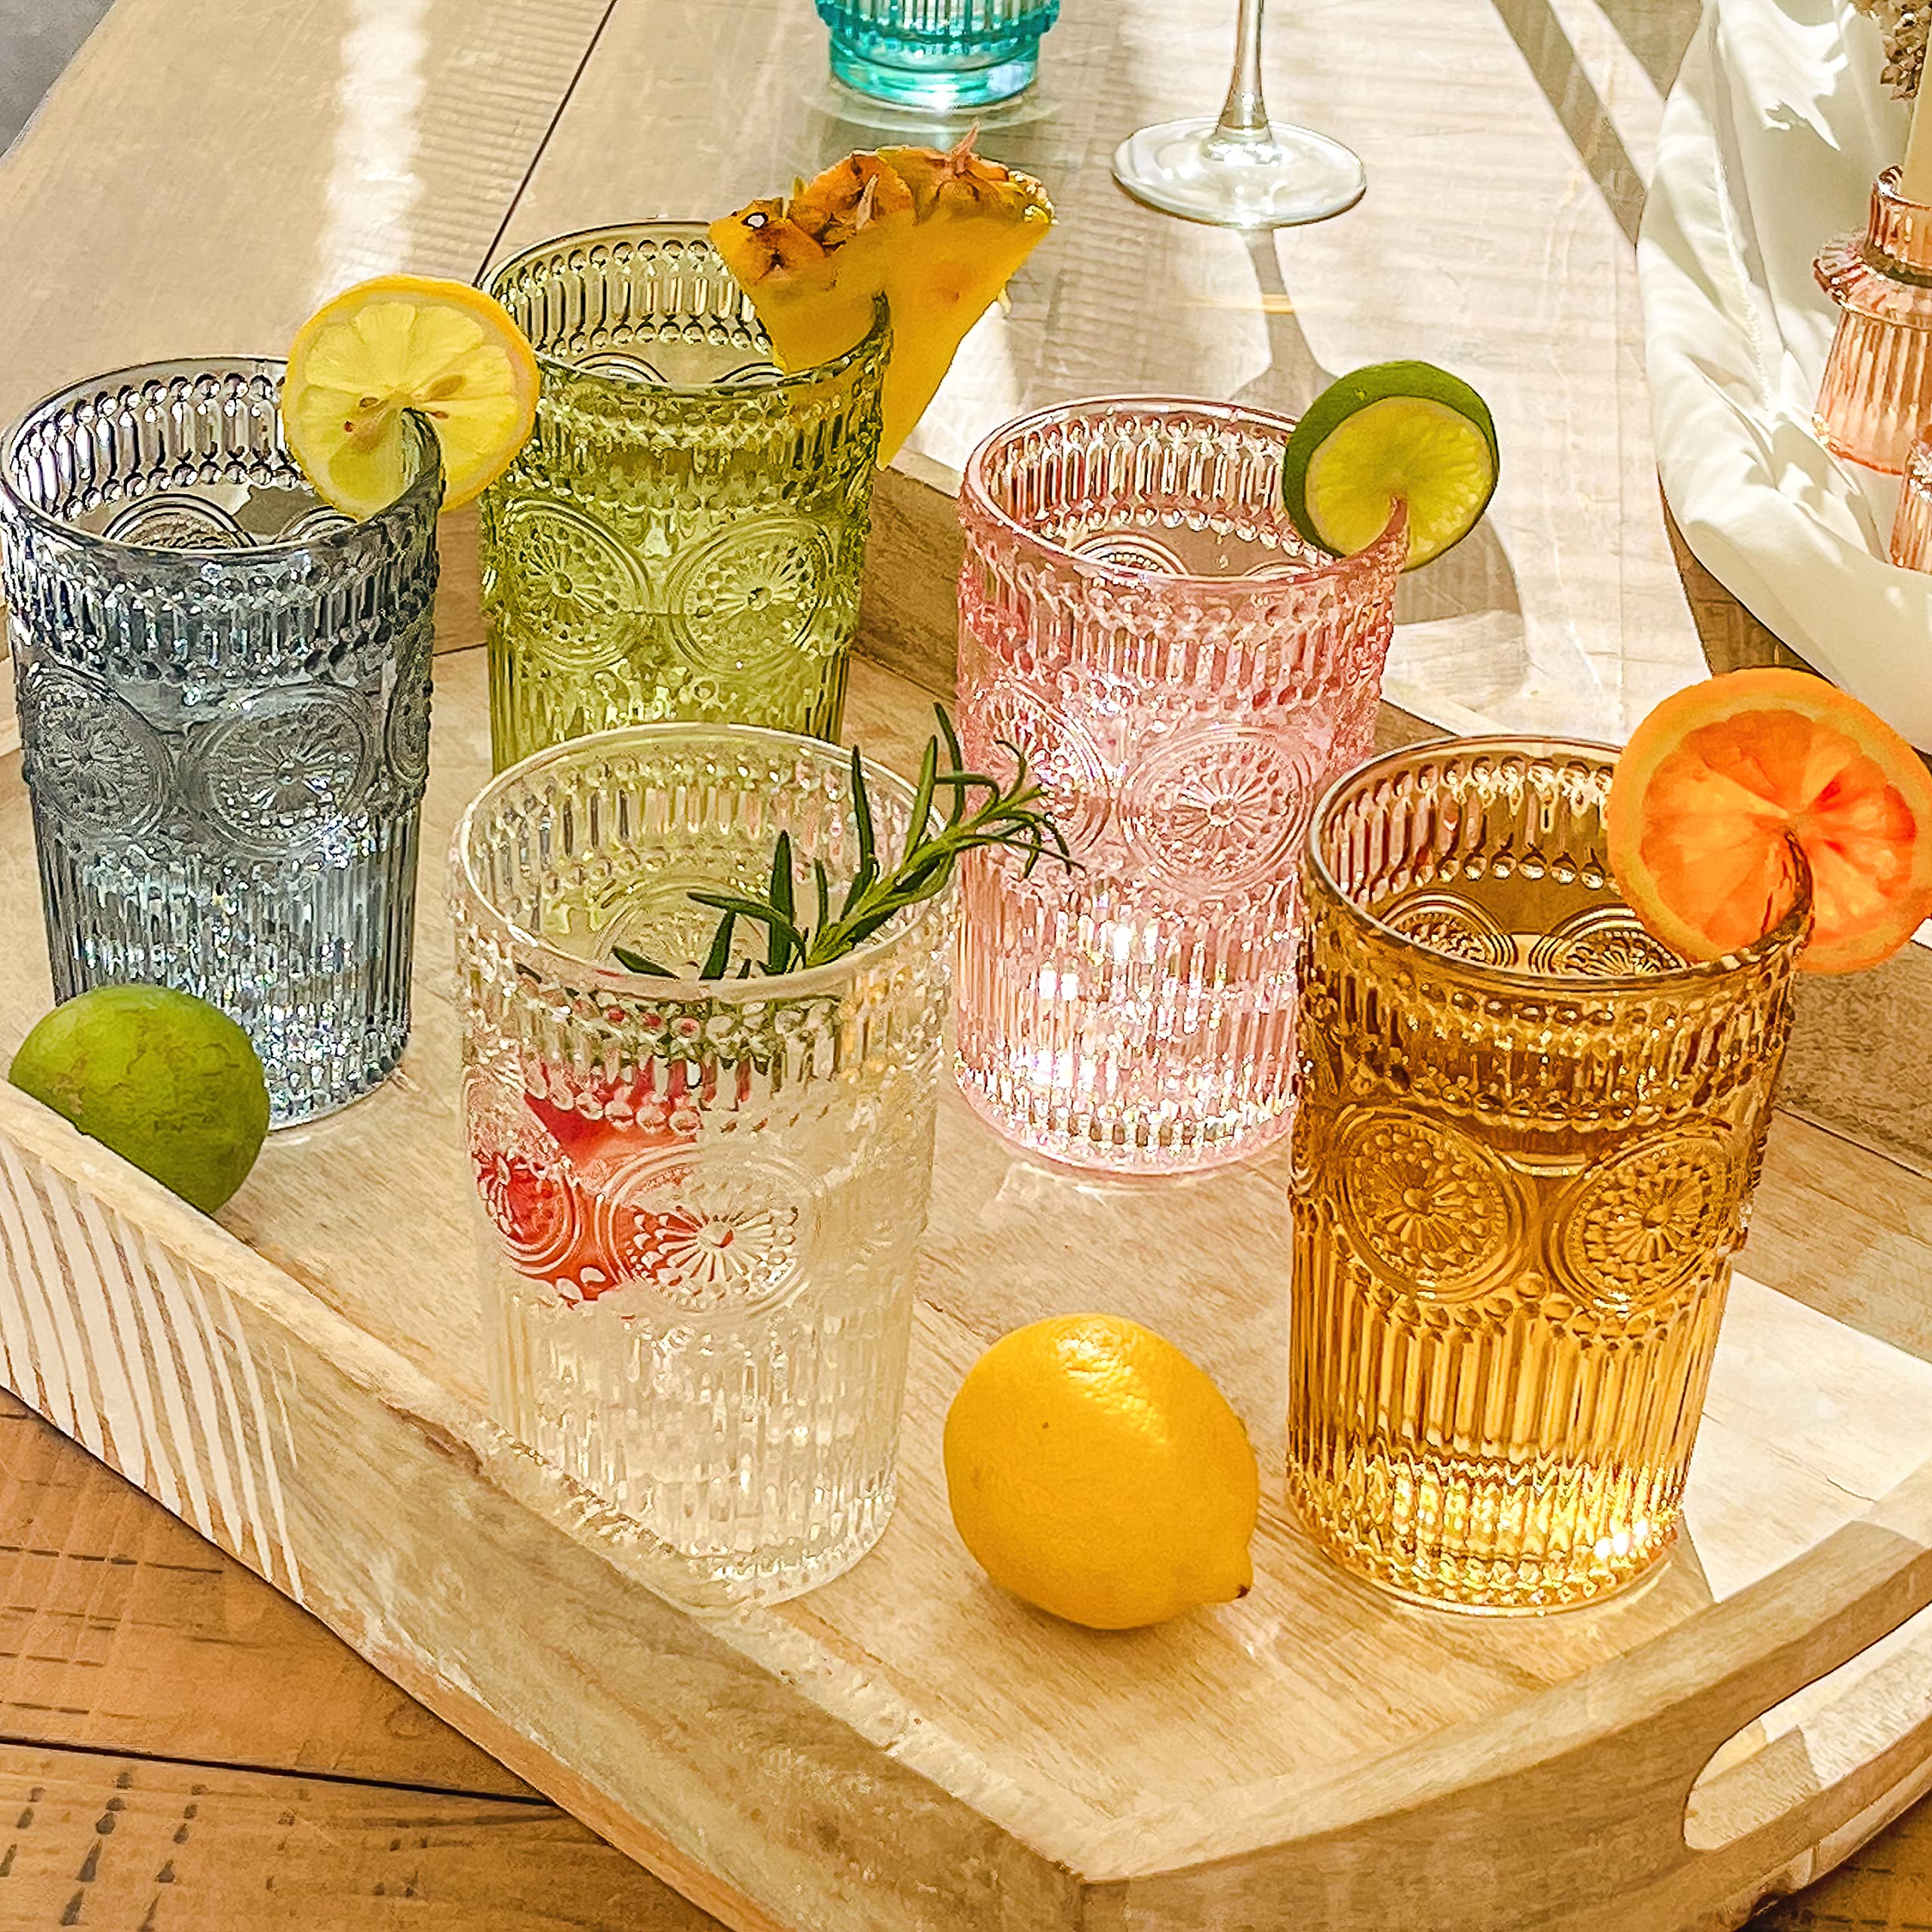 Vintage Textured Sage Green Striped Drinking Glasses Set of 6-13 oz Ribbed Glassware with Flower Design| Cocktail Set, Juice Glass, Water Tumbler